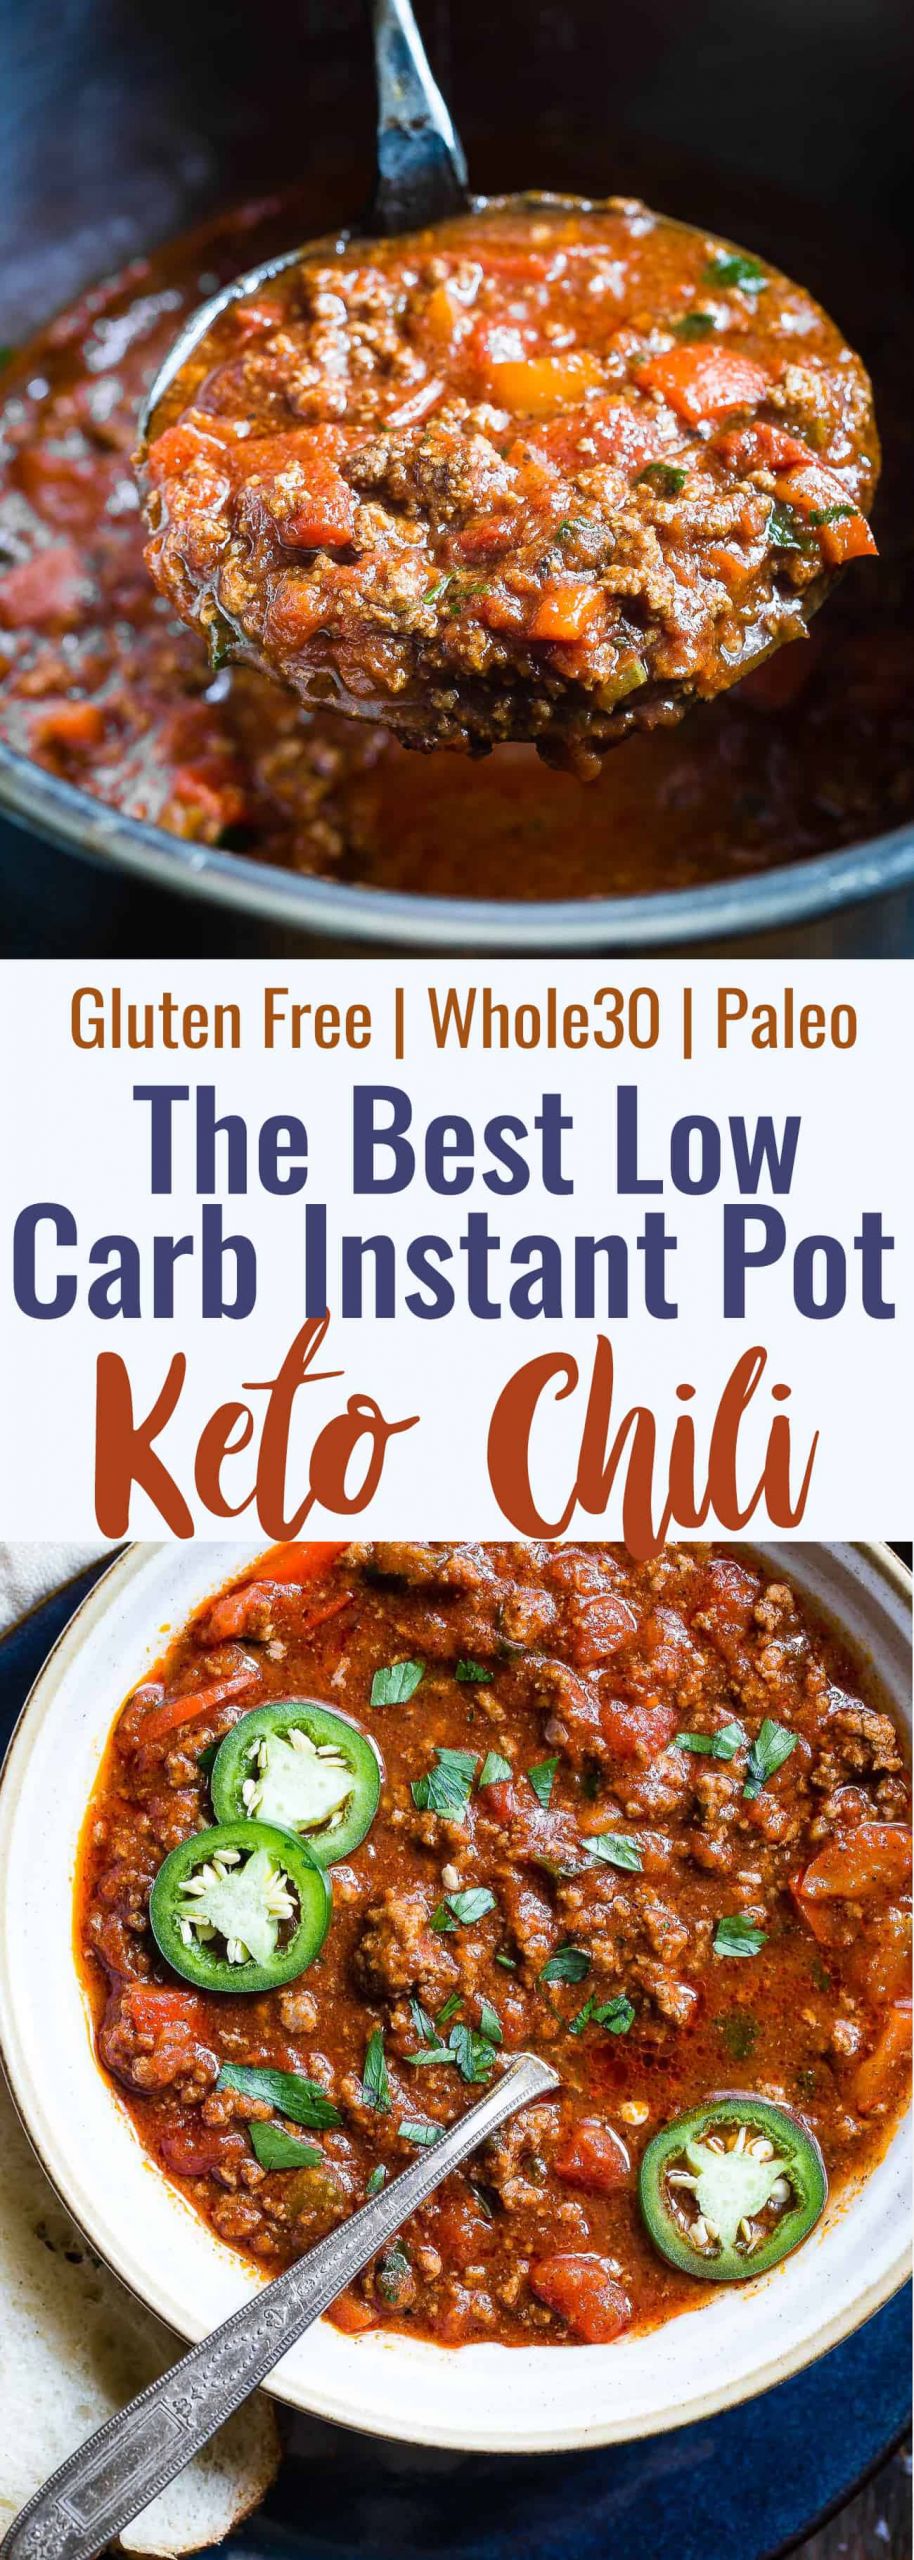 Instapot Keto Chili Recipes
 No Bean Whole30 Keto Chili in the Instant Pot Paleo